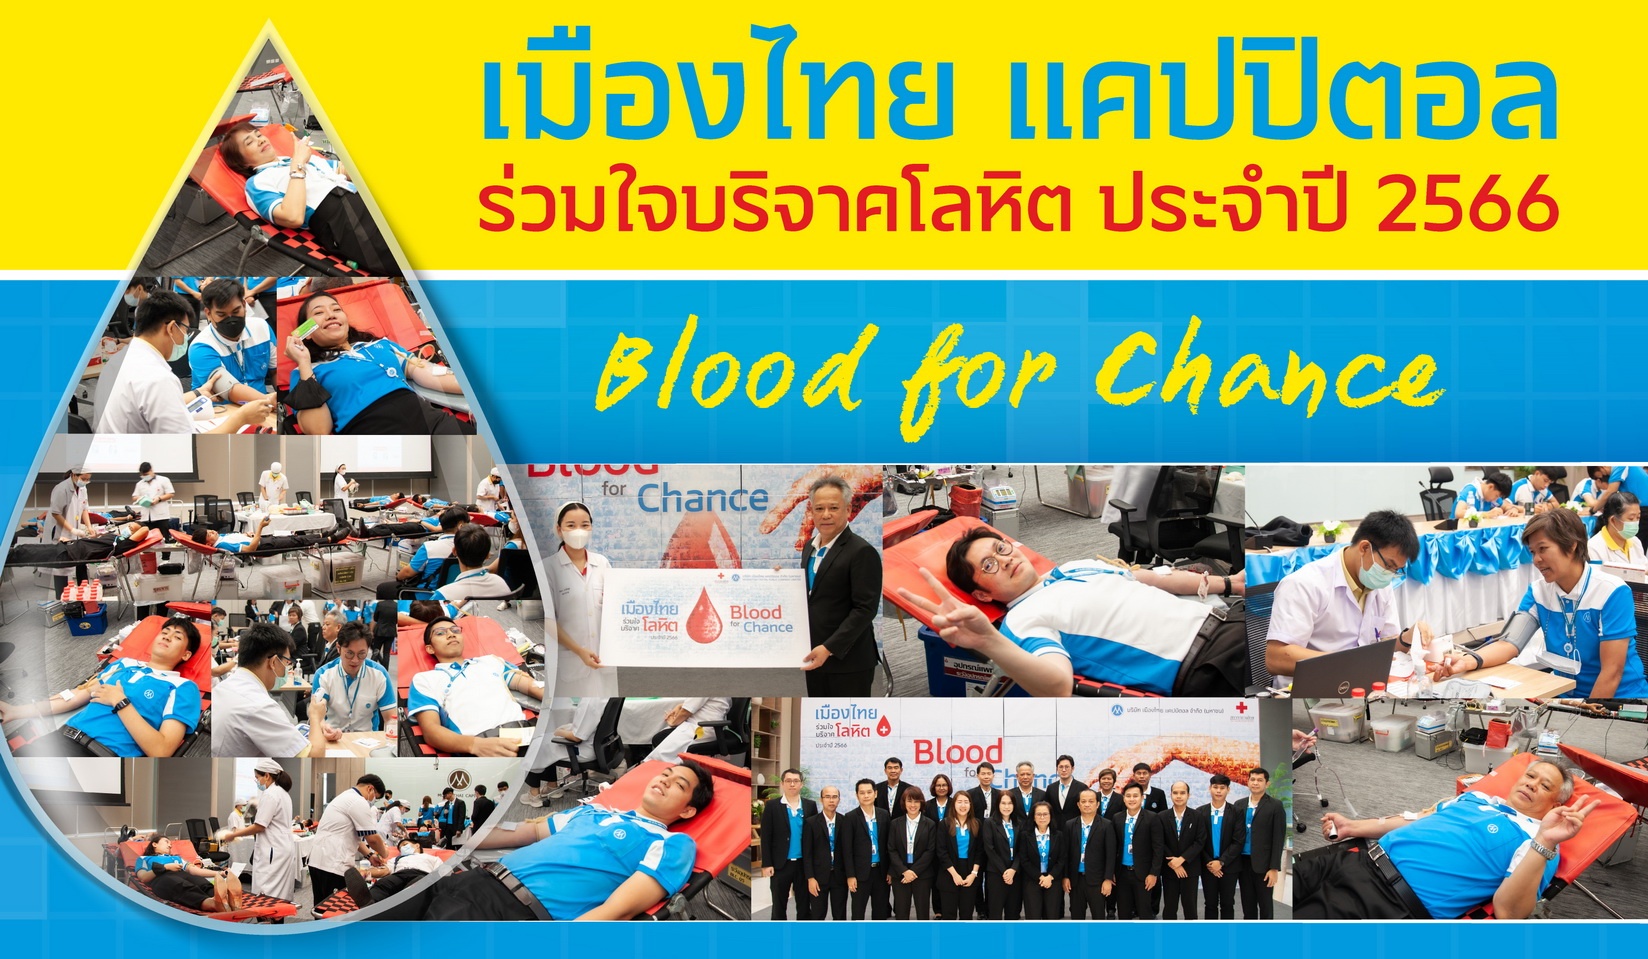 MTC ร่วมบริจาคโลหิตโครงการ “Blood for Chance”